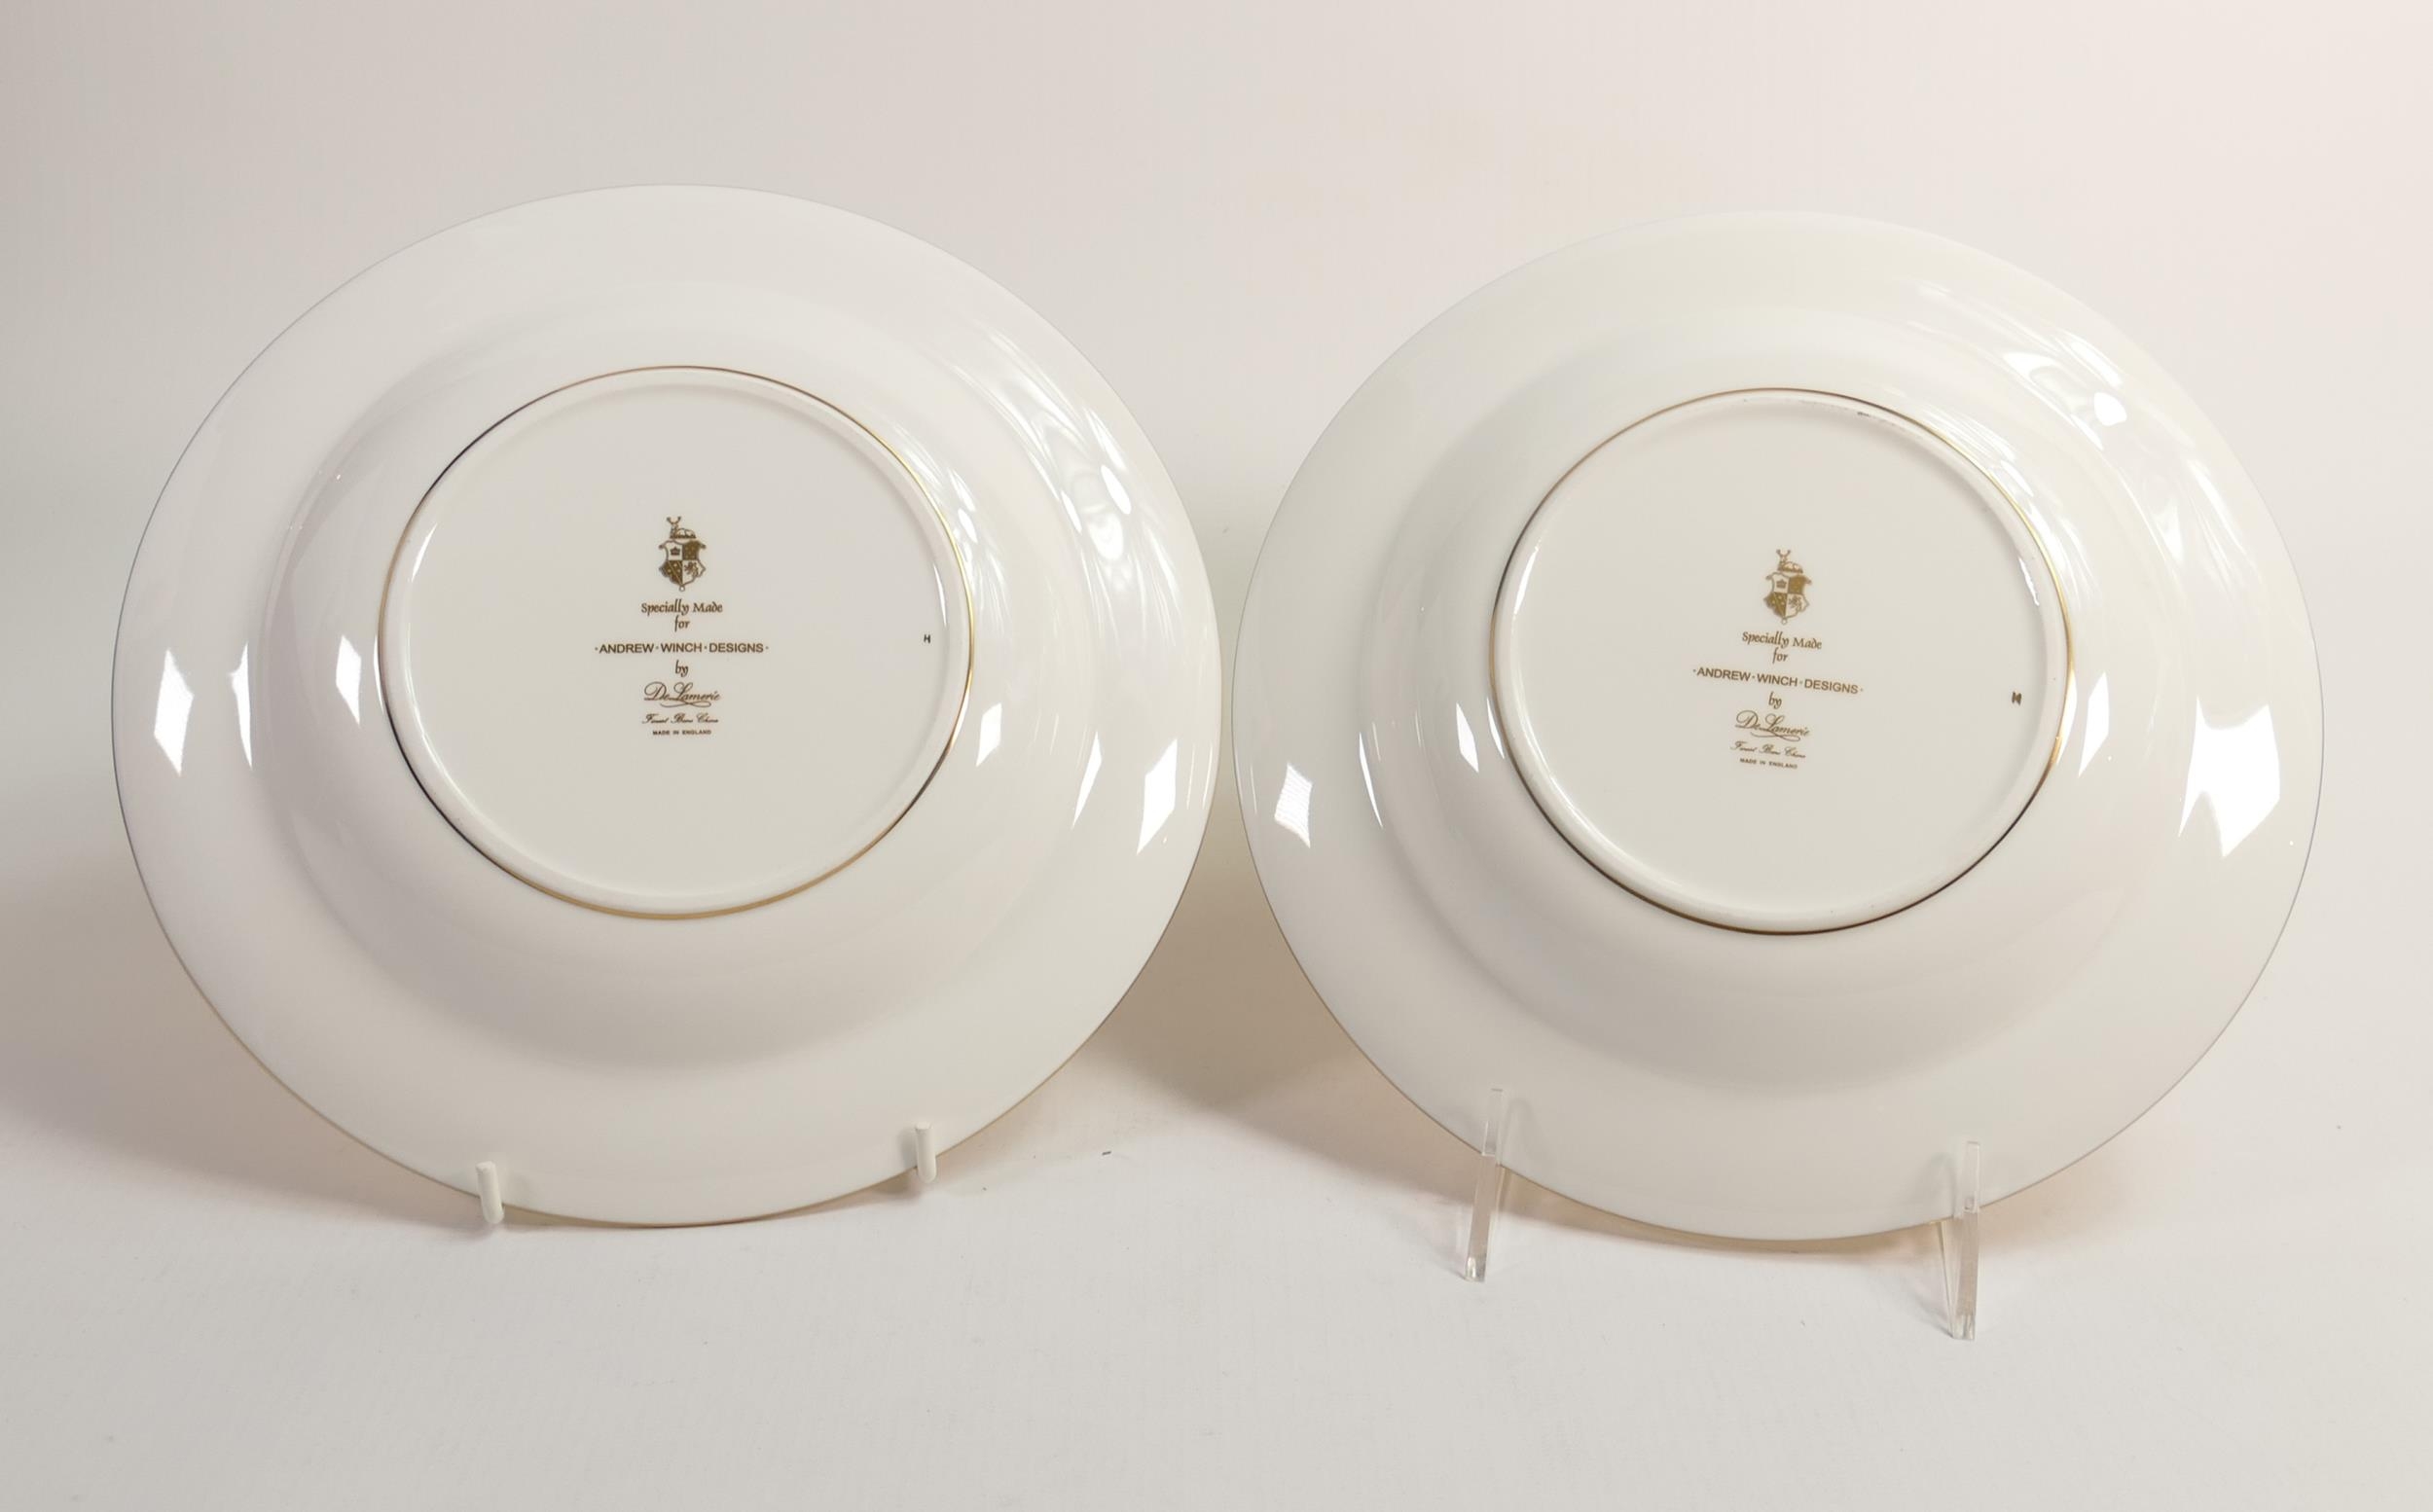 De Lamerie Fine Bone China Special Commission Royale for Superyacht Madame Gu Patterned Rimmed Bowls - Image 2 of 2